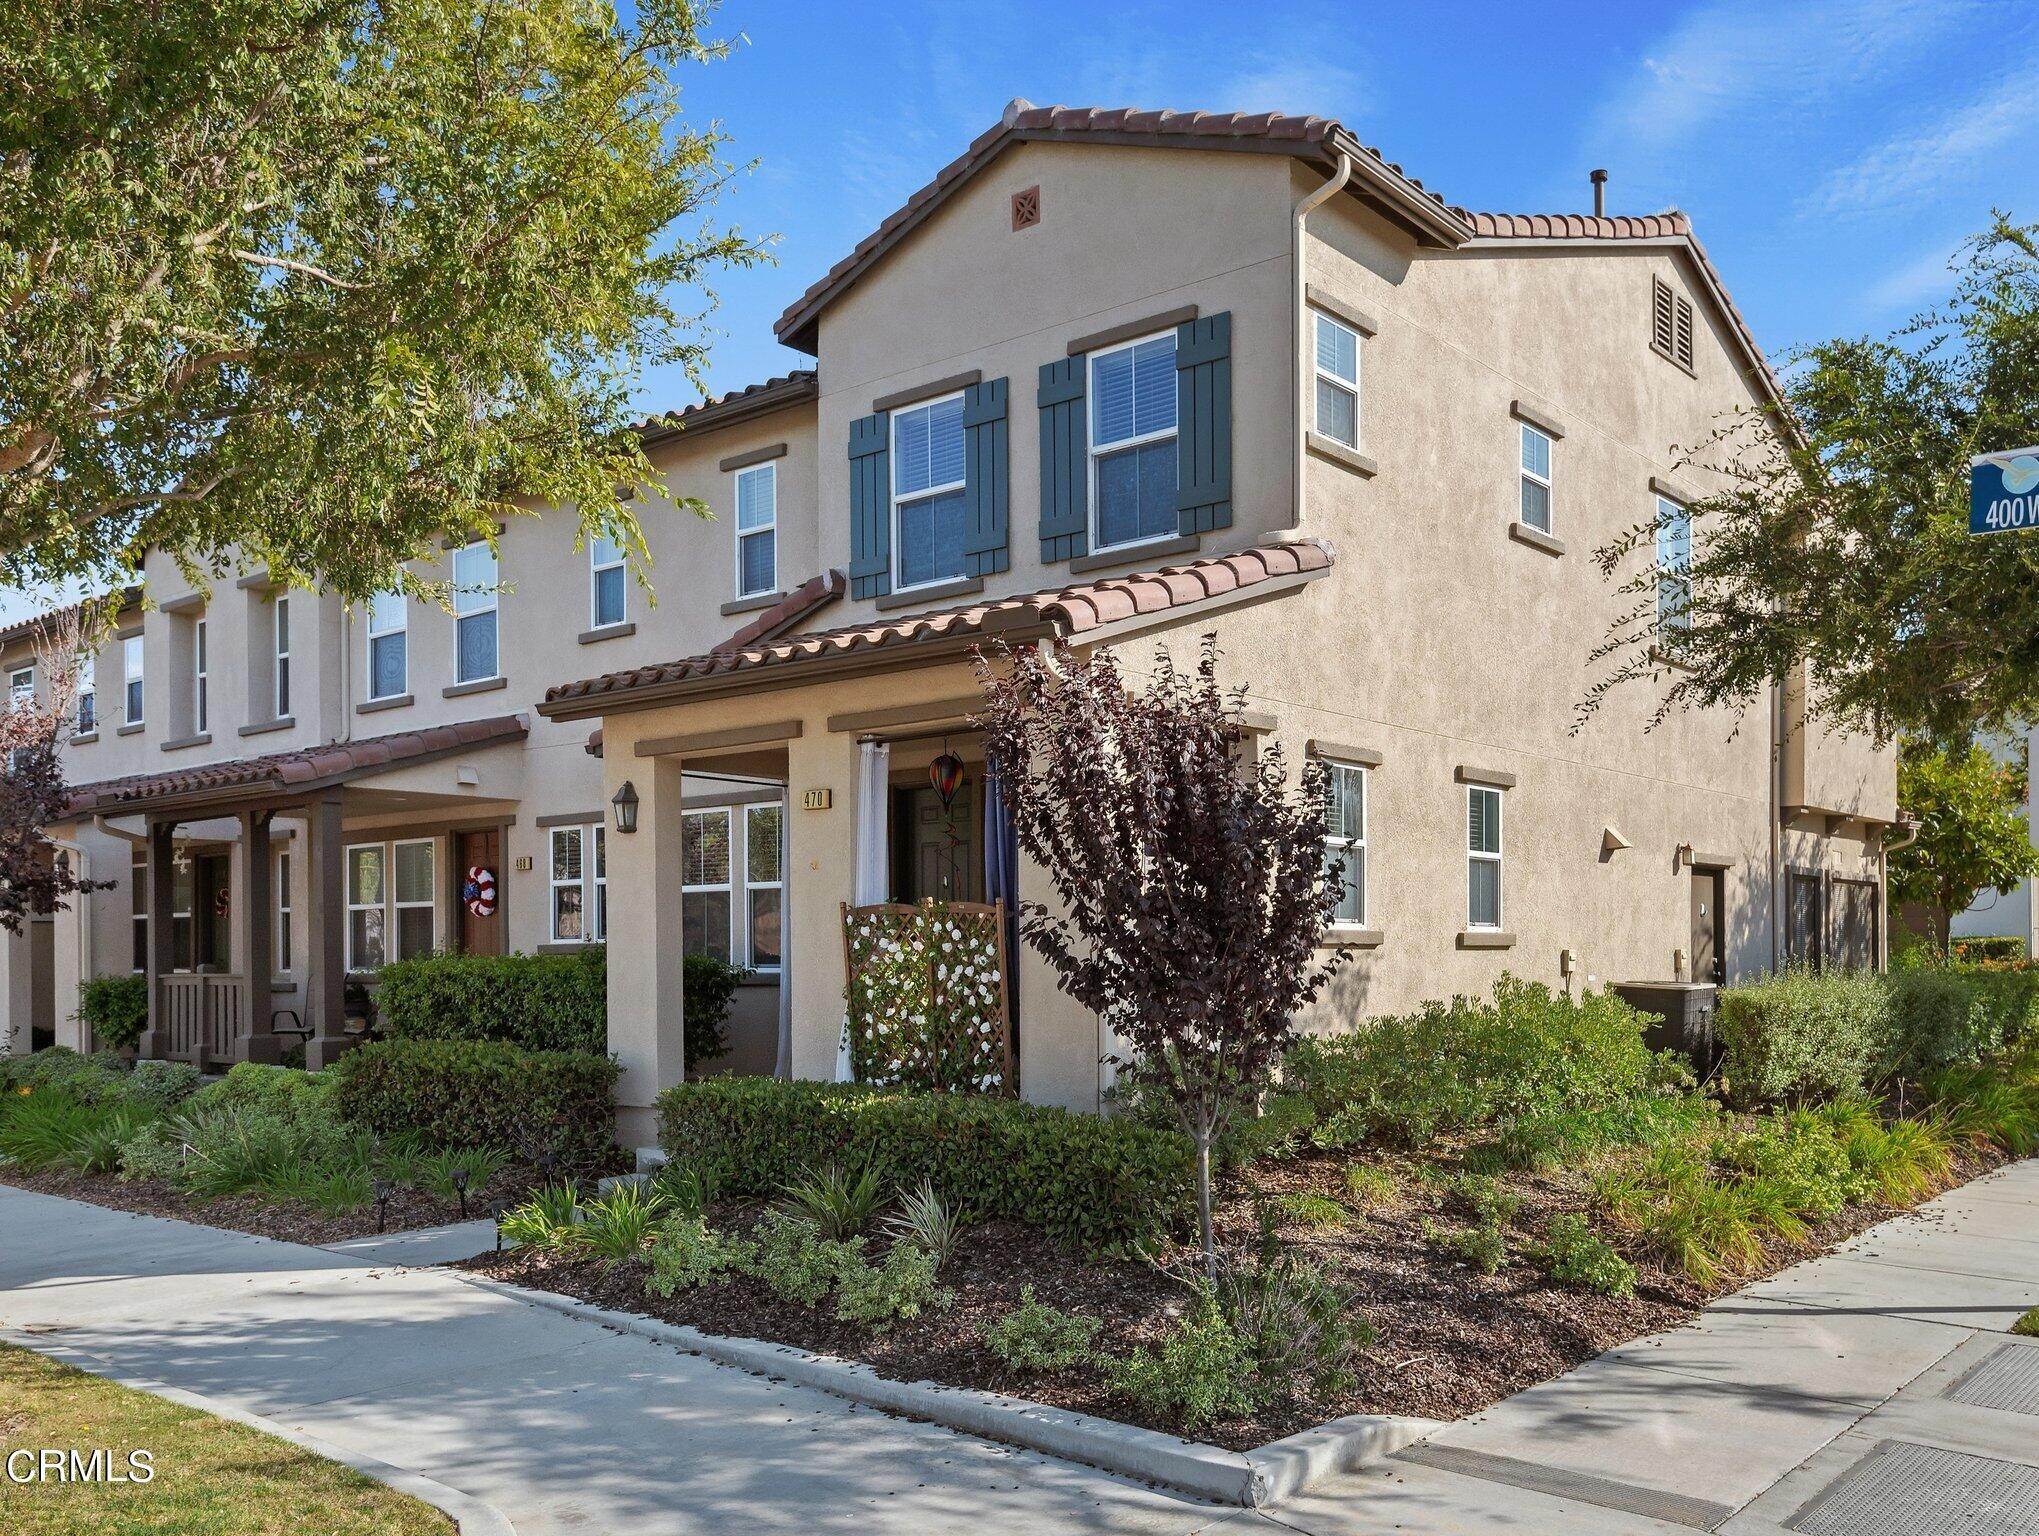 2. Condominiums for Sale at 470 Garonne Street Oxnard, California 93036 United States